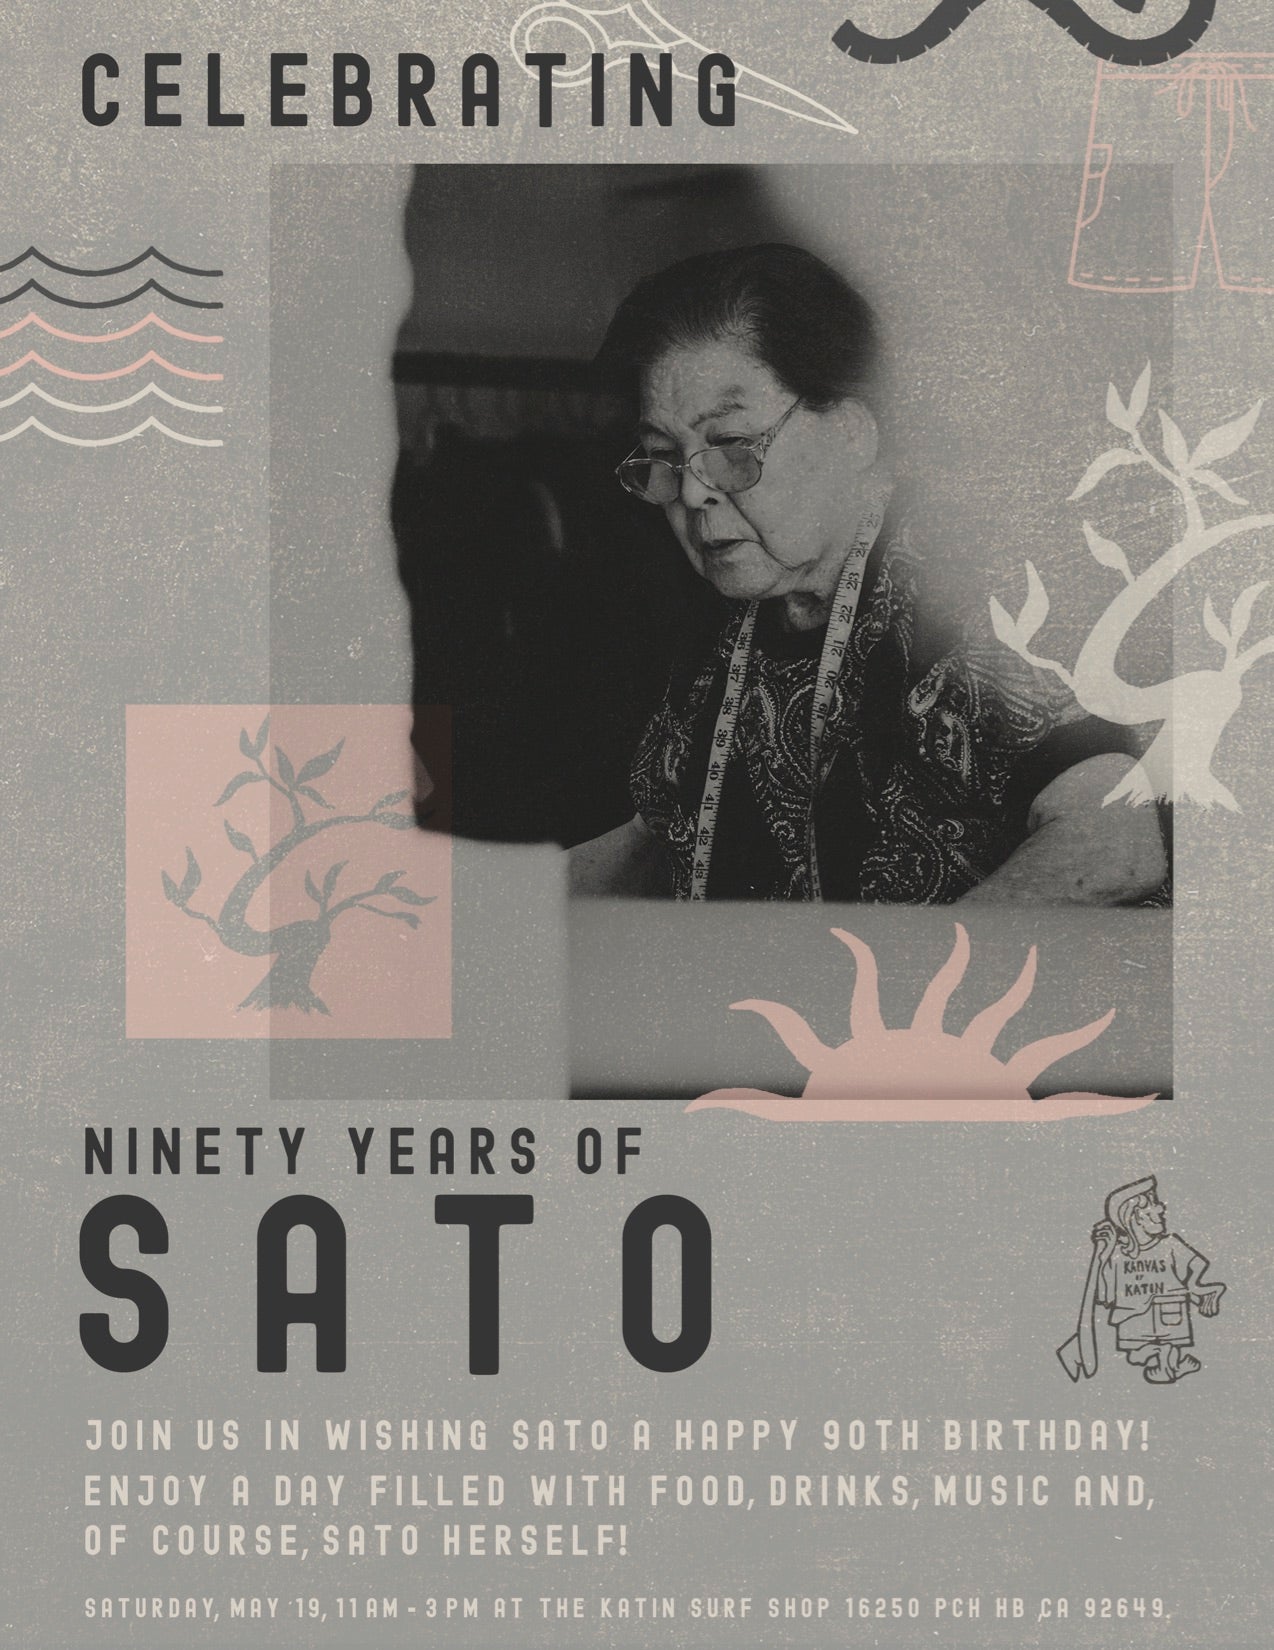 Celebrating 90 years of Sato!